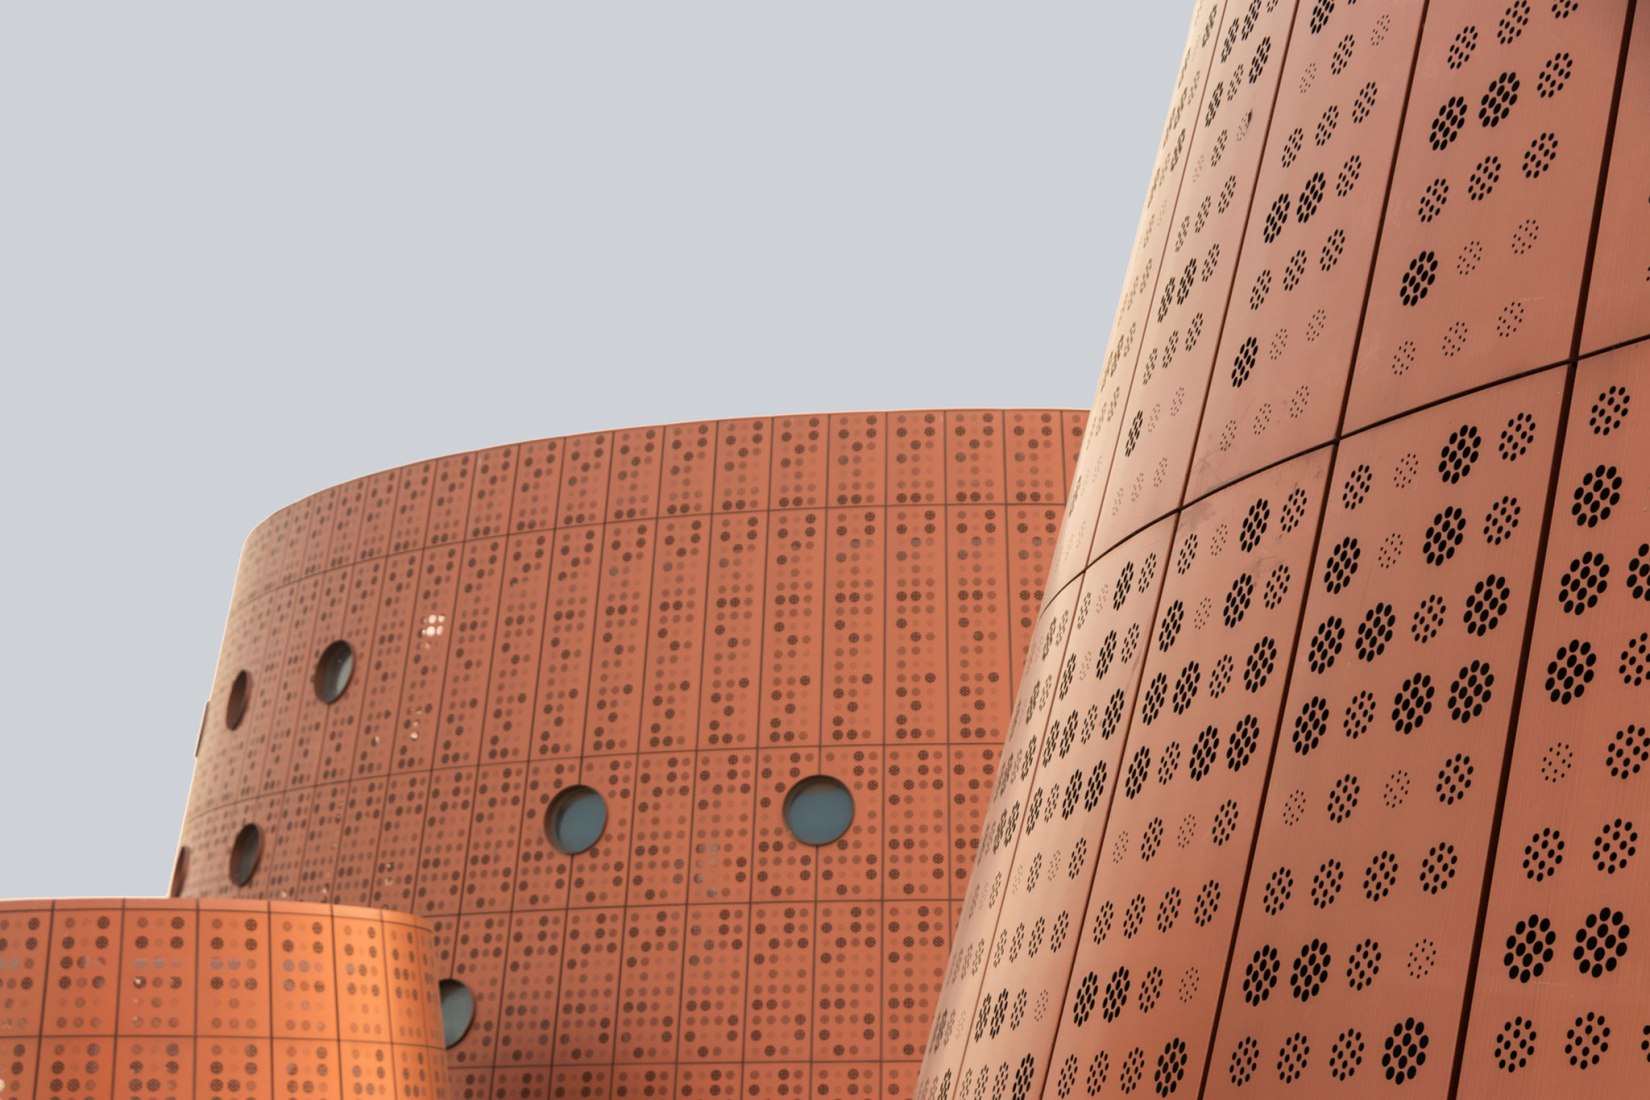 Tianjin Binhai Exploratorium by Bernard Tschumi Architects. Photograph by Kris Provoost